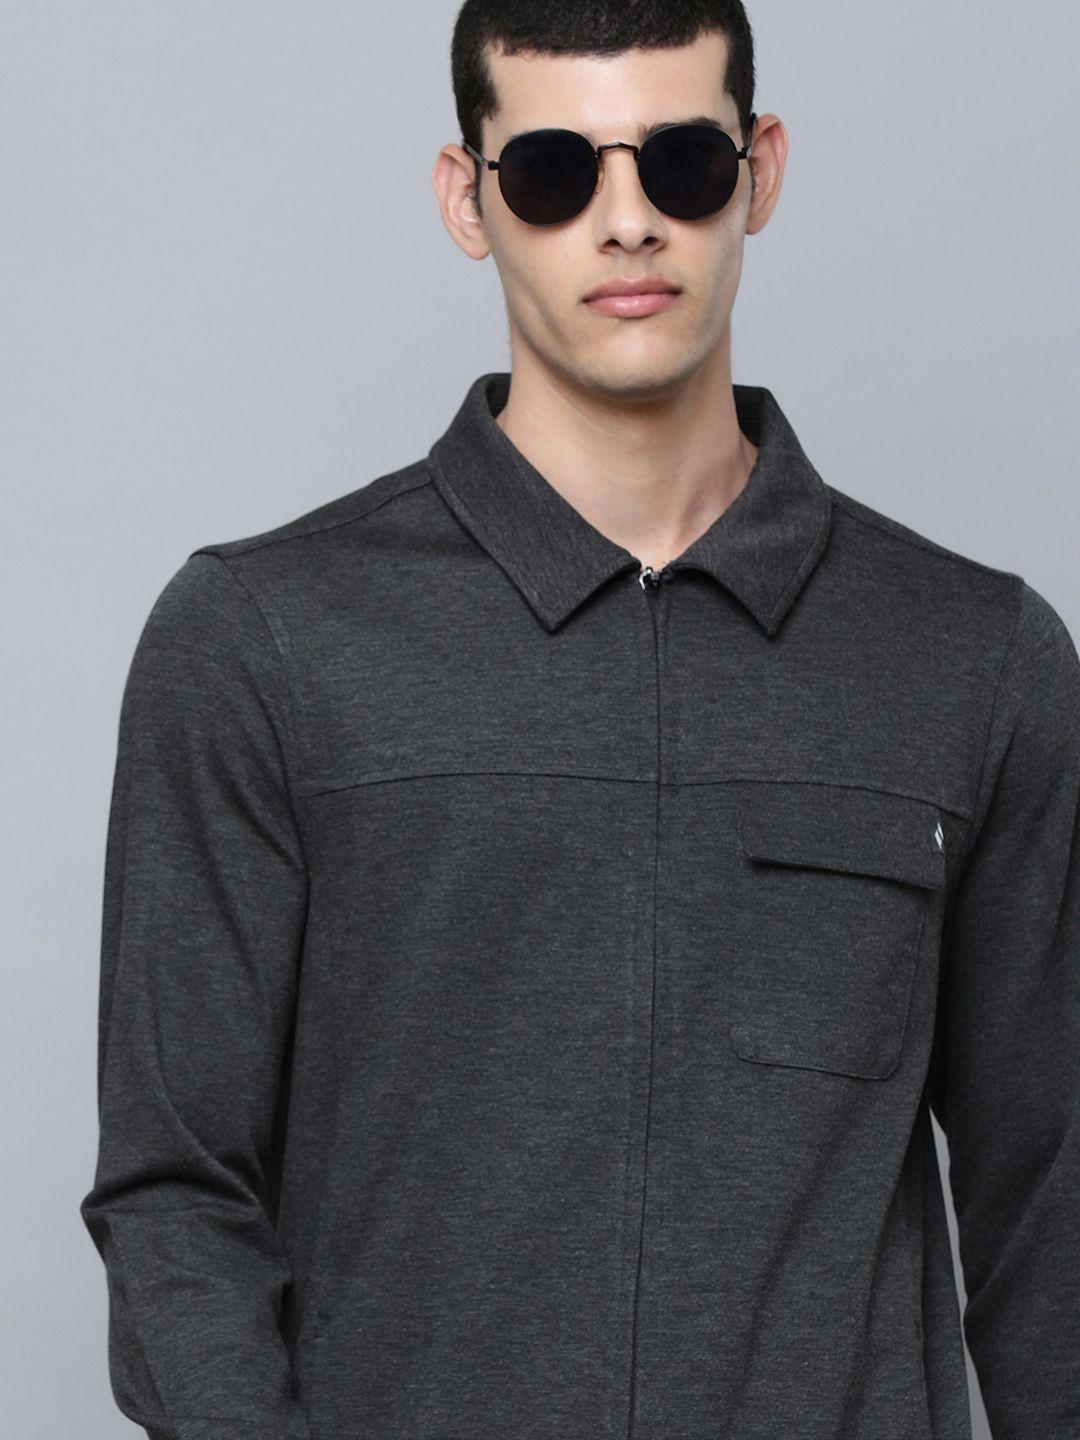 skechers-men-charcoal-grey-melange-solid-goknit-ultra-shacket-sweatshirt